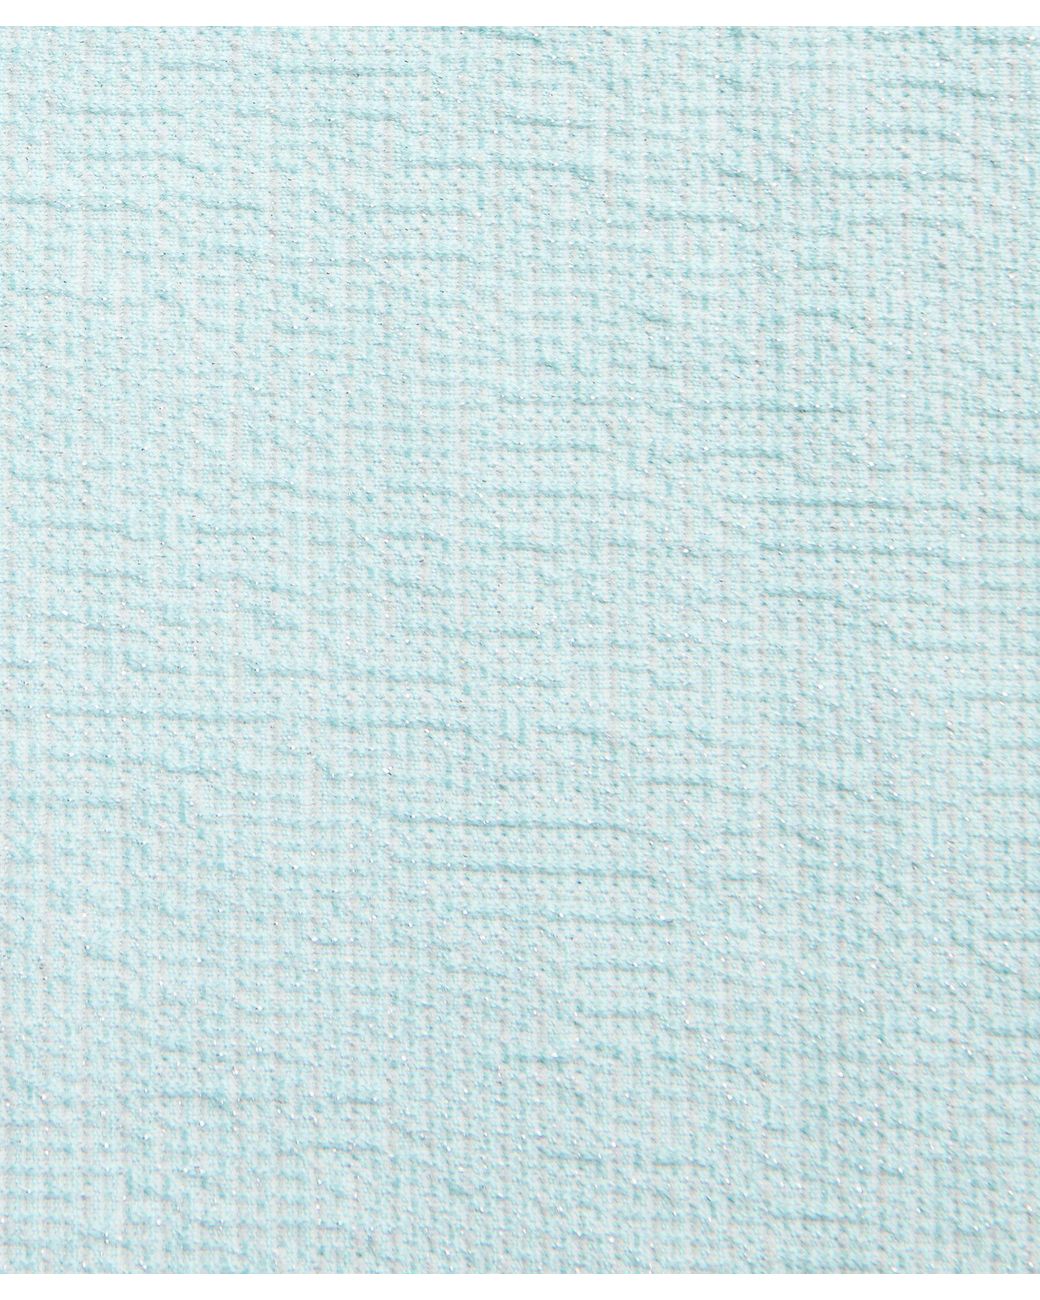 lululemon parallel texture sheer blue water｜TikTok Search